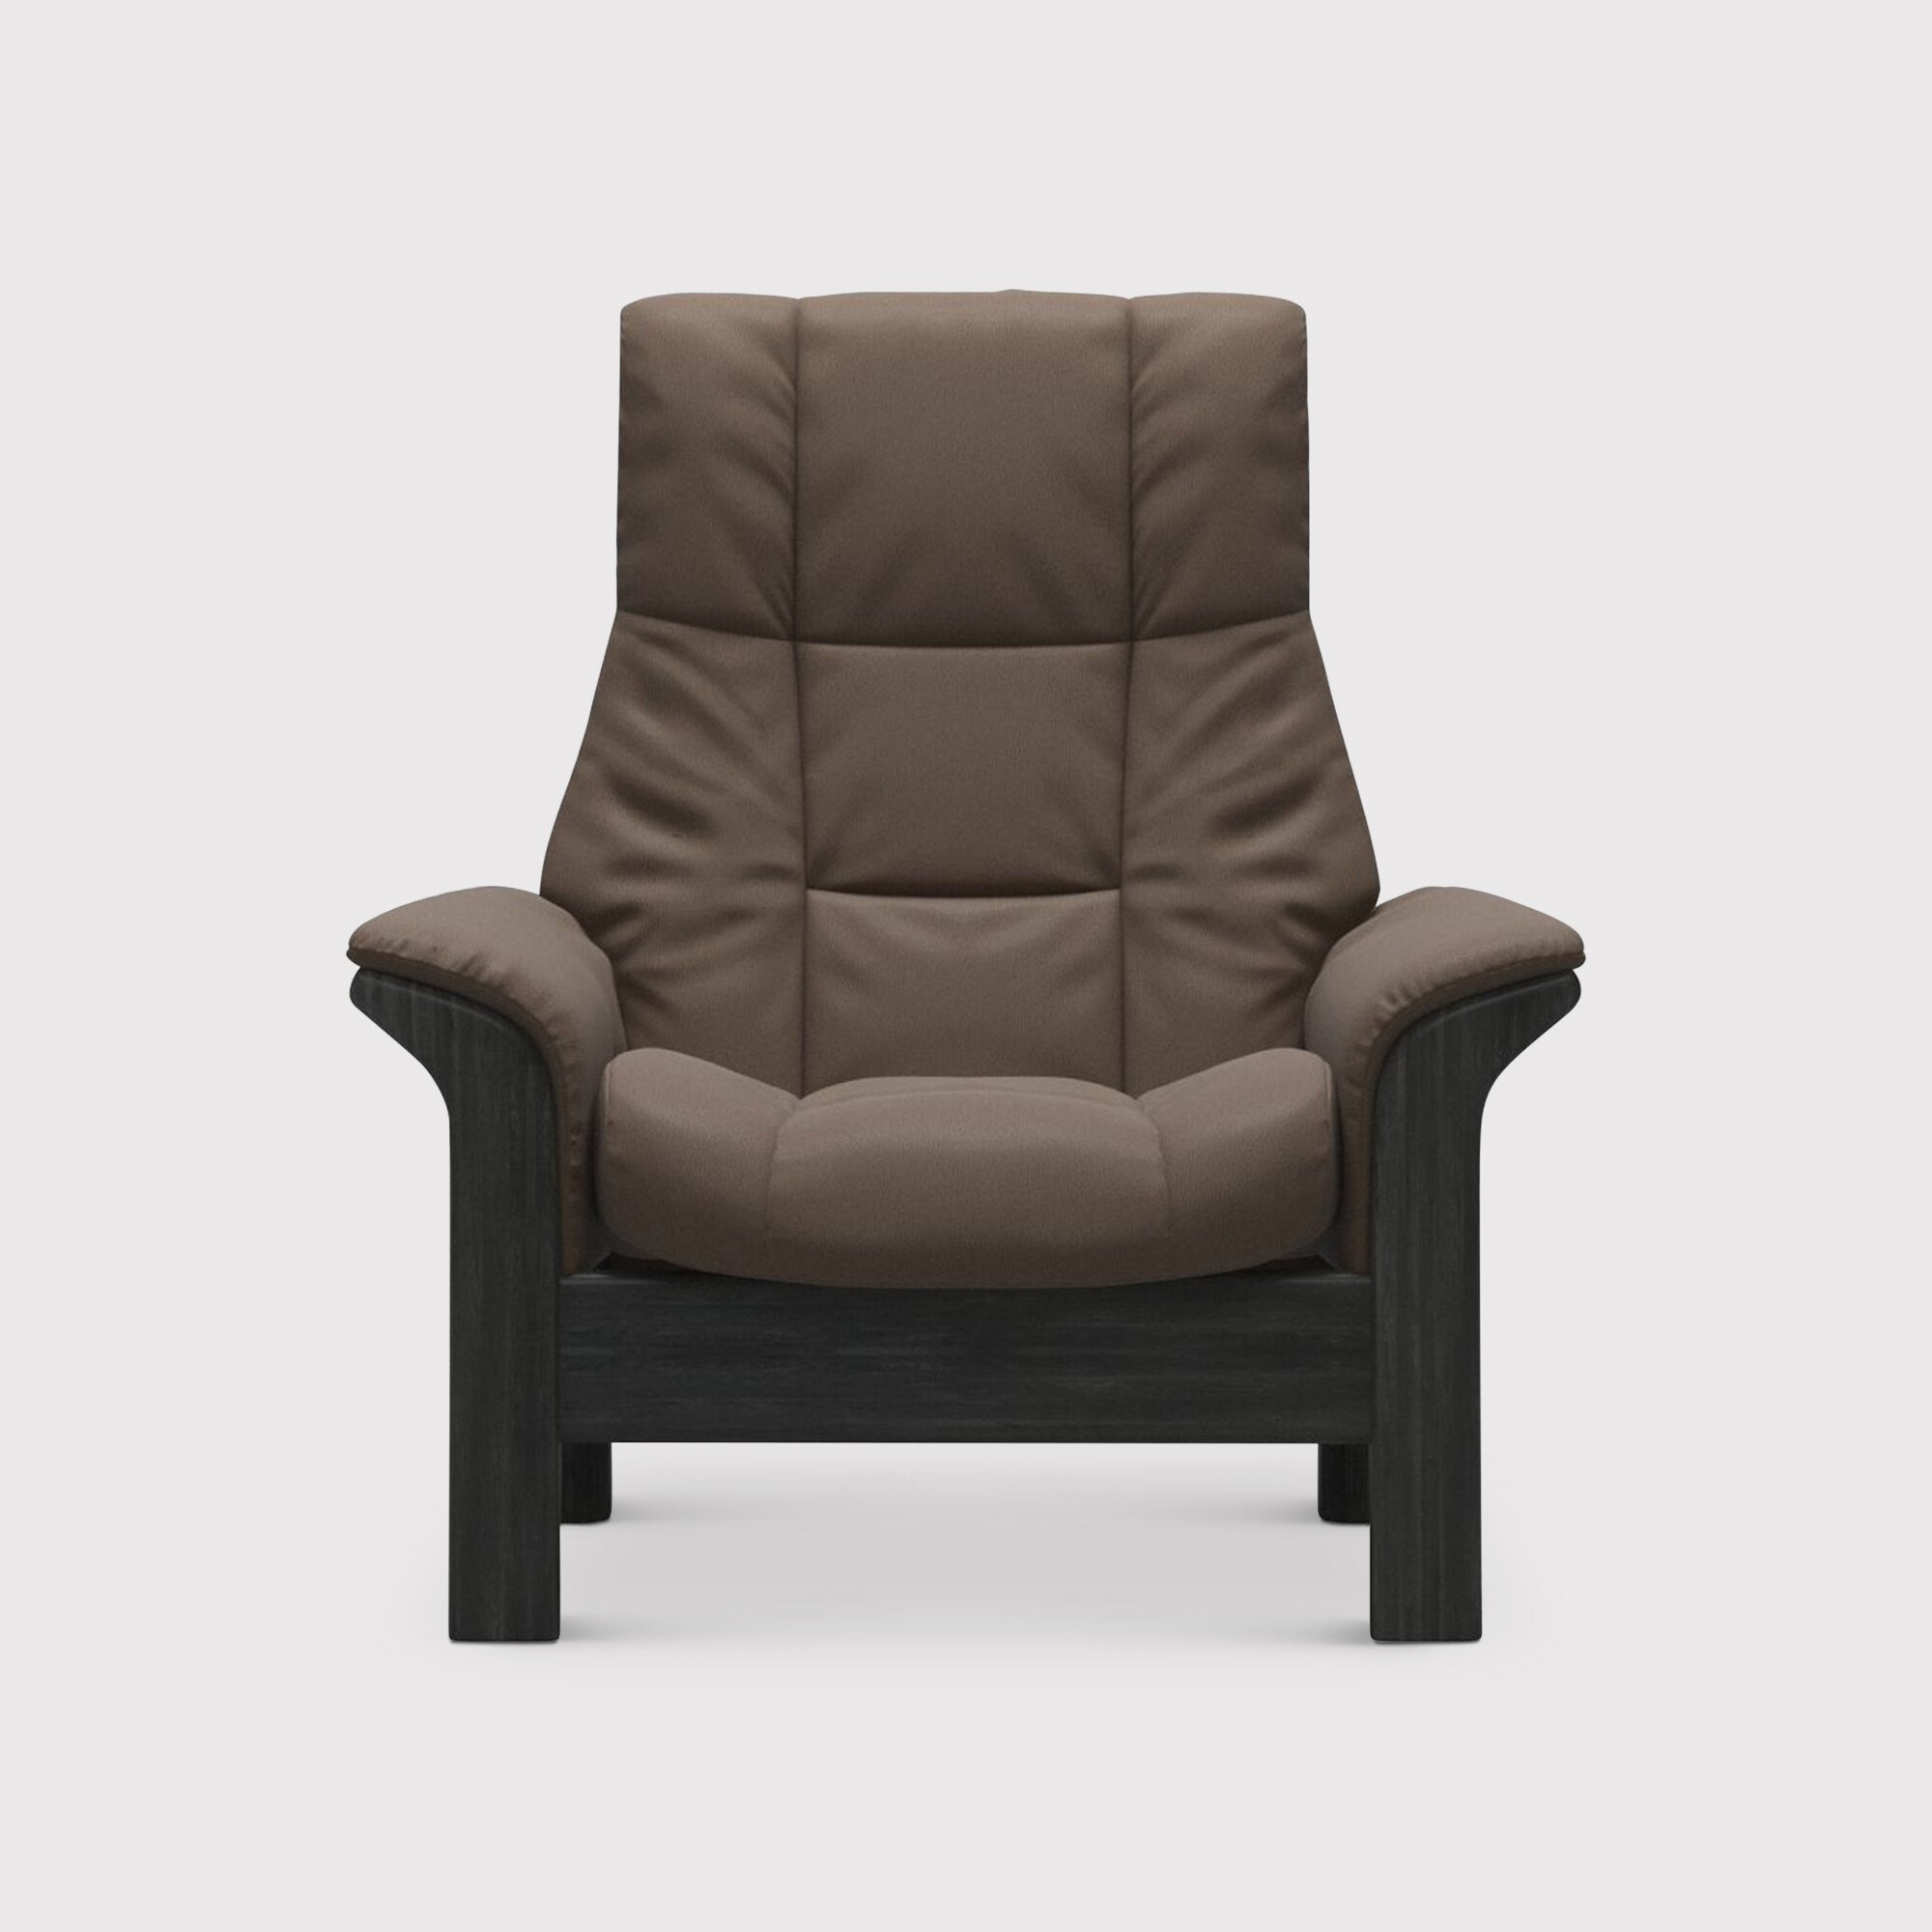 Stressless Windsor High Back Highback Chair, Brown Leather | Barker & Stonehouse